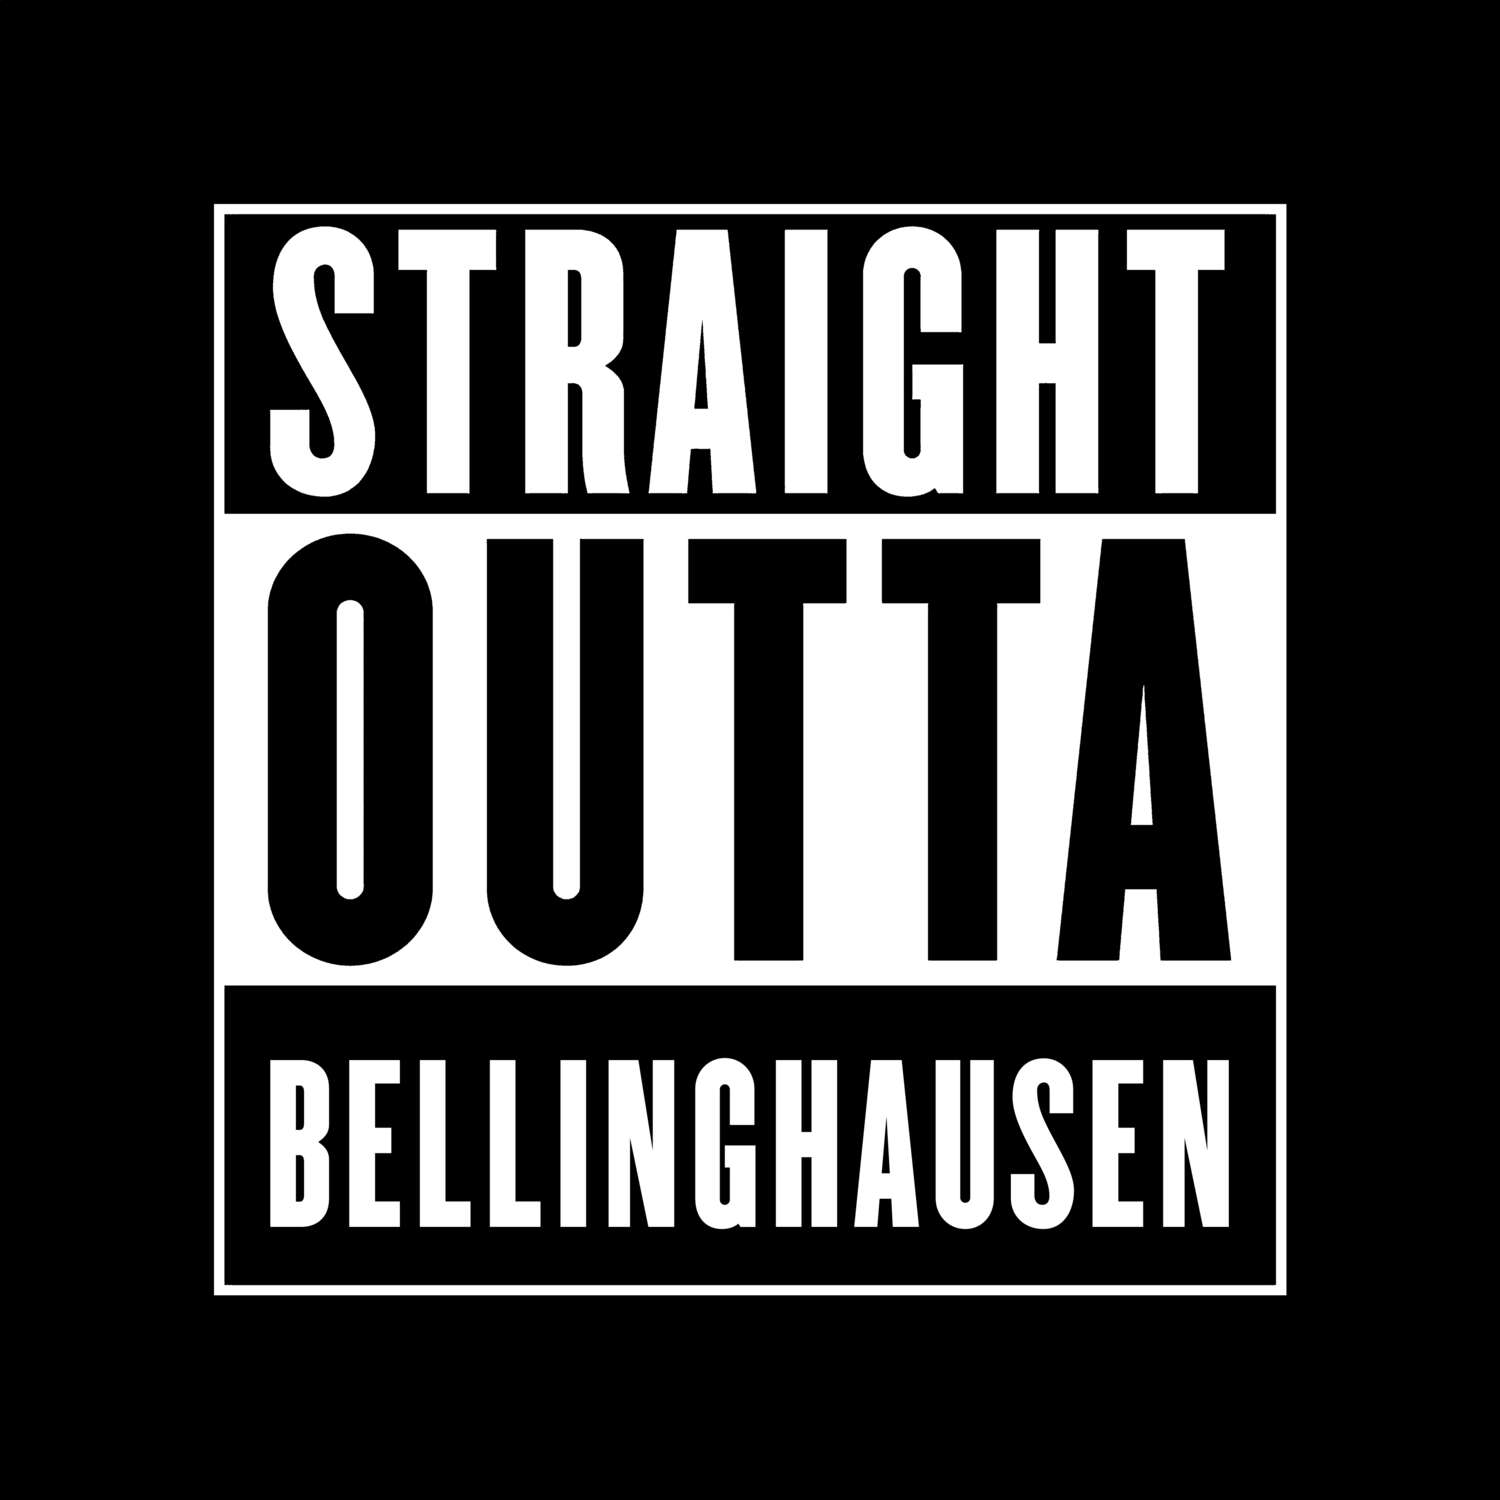 Bellinghausen T-Shirt »Straight Outta«